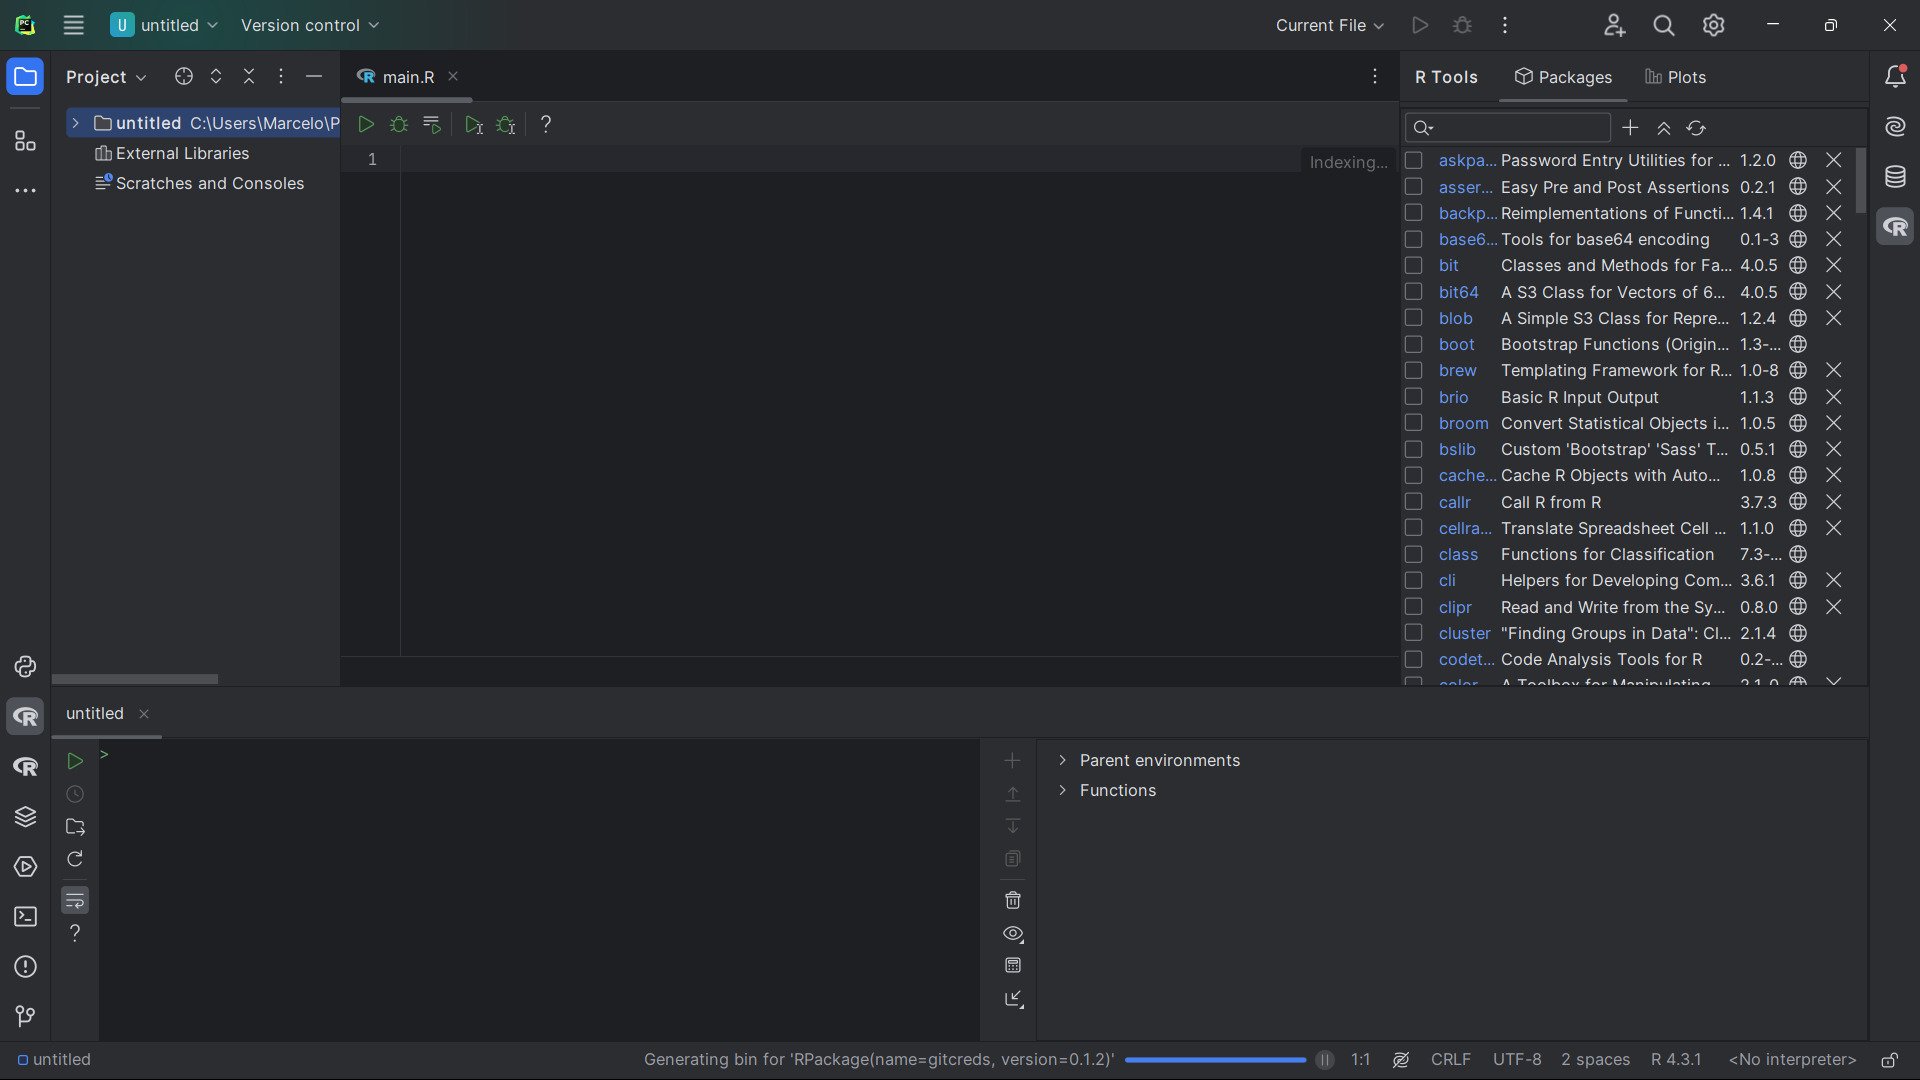 Captura de tela do editor do PyCharm, contendo as telas de editor de texto, console, ambiente e arquivos.